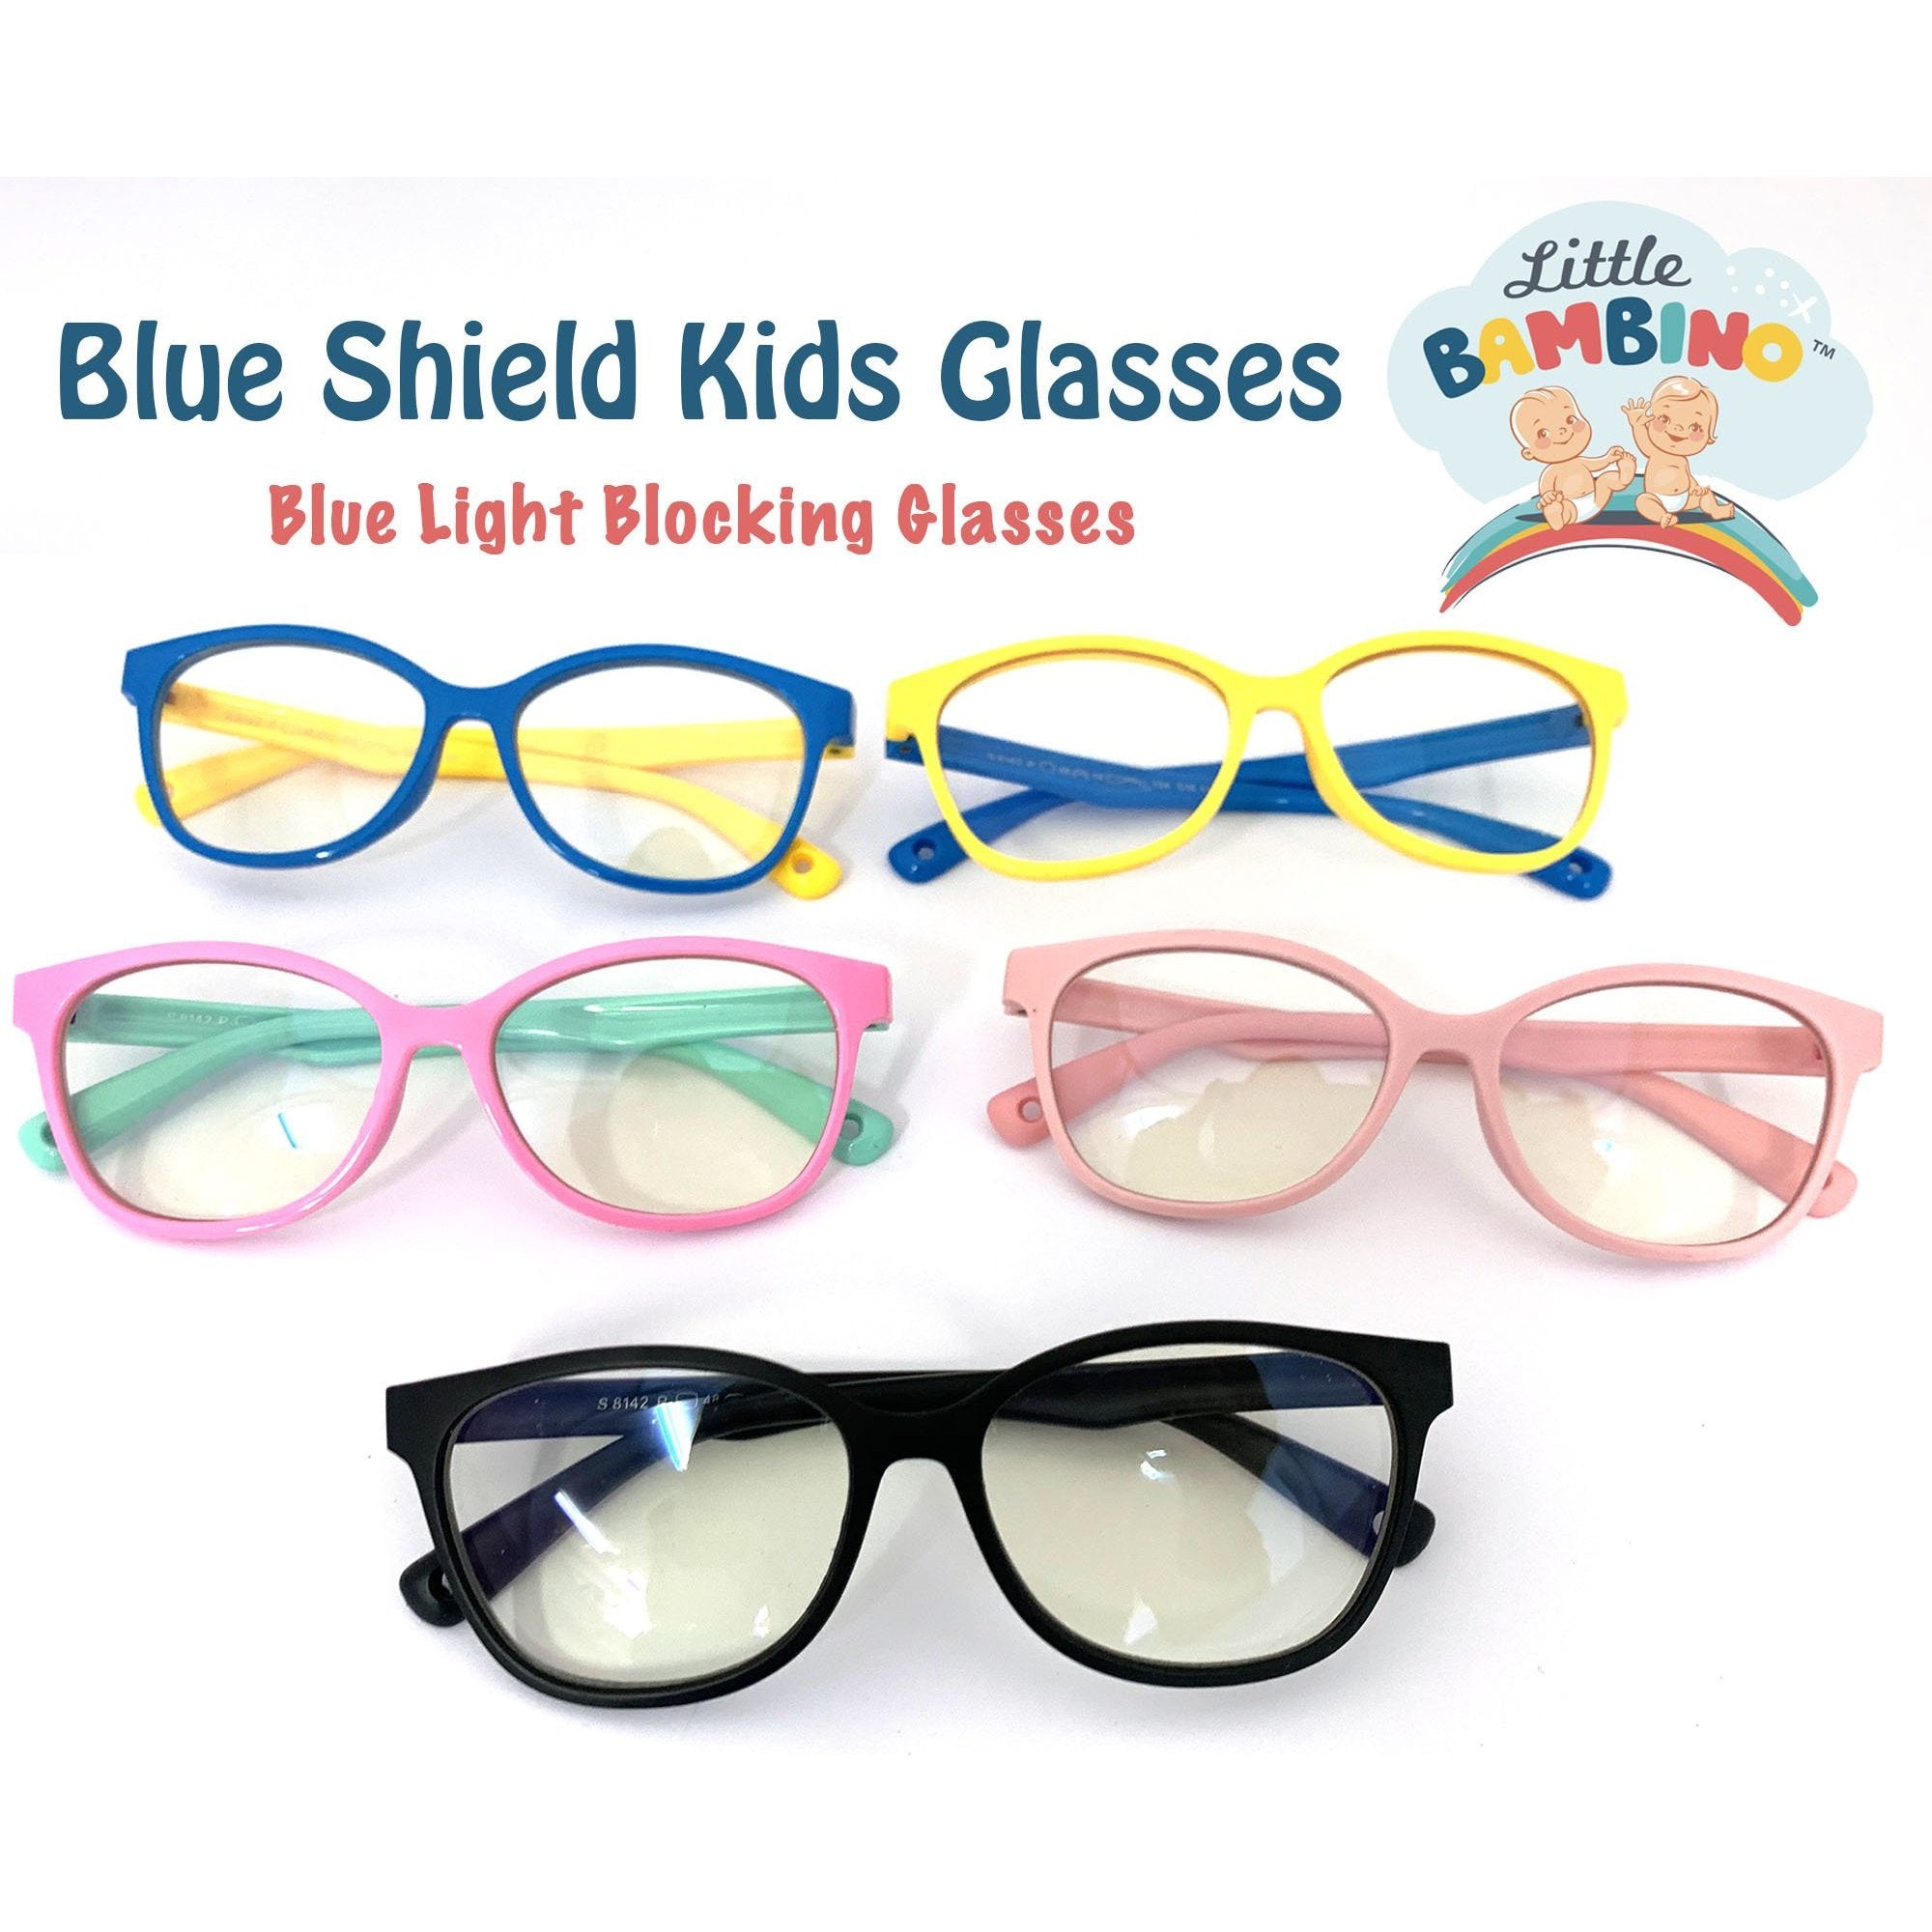 Little Bambino Blue Shield Kids Glasses